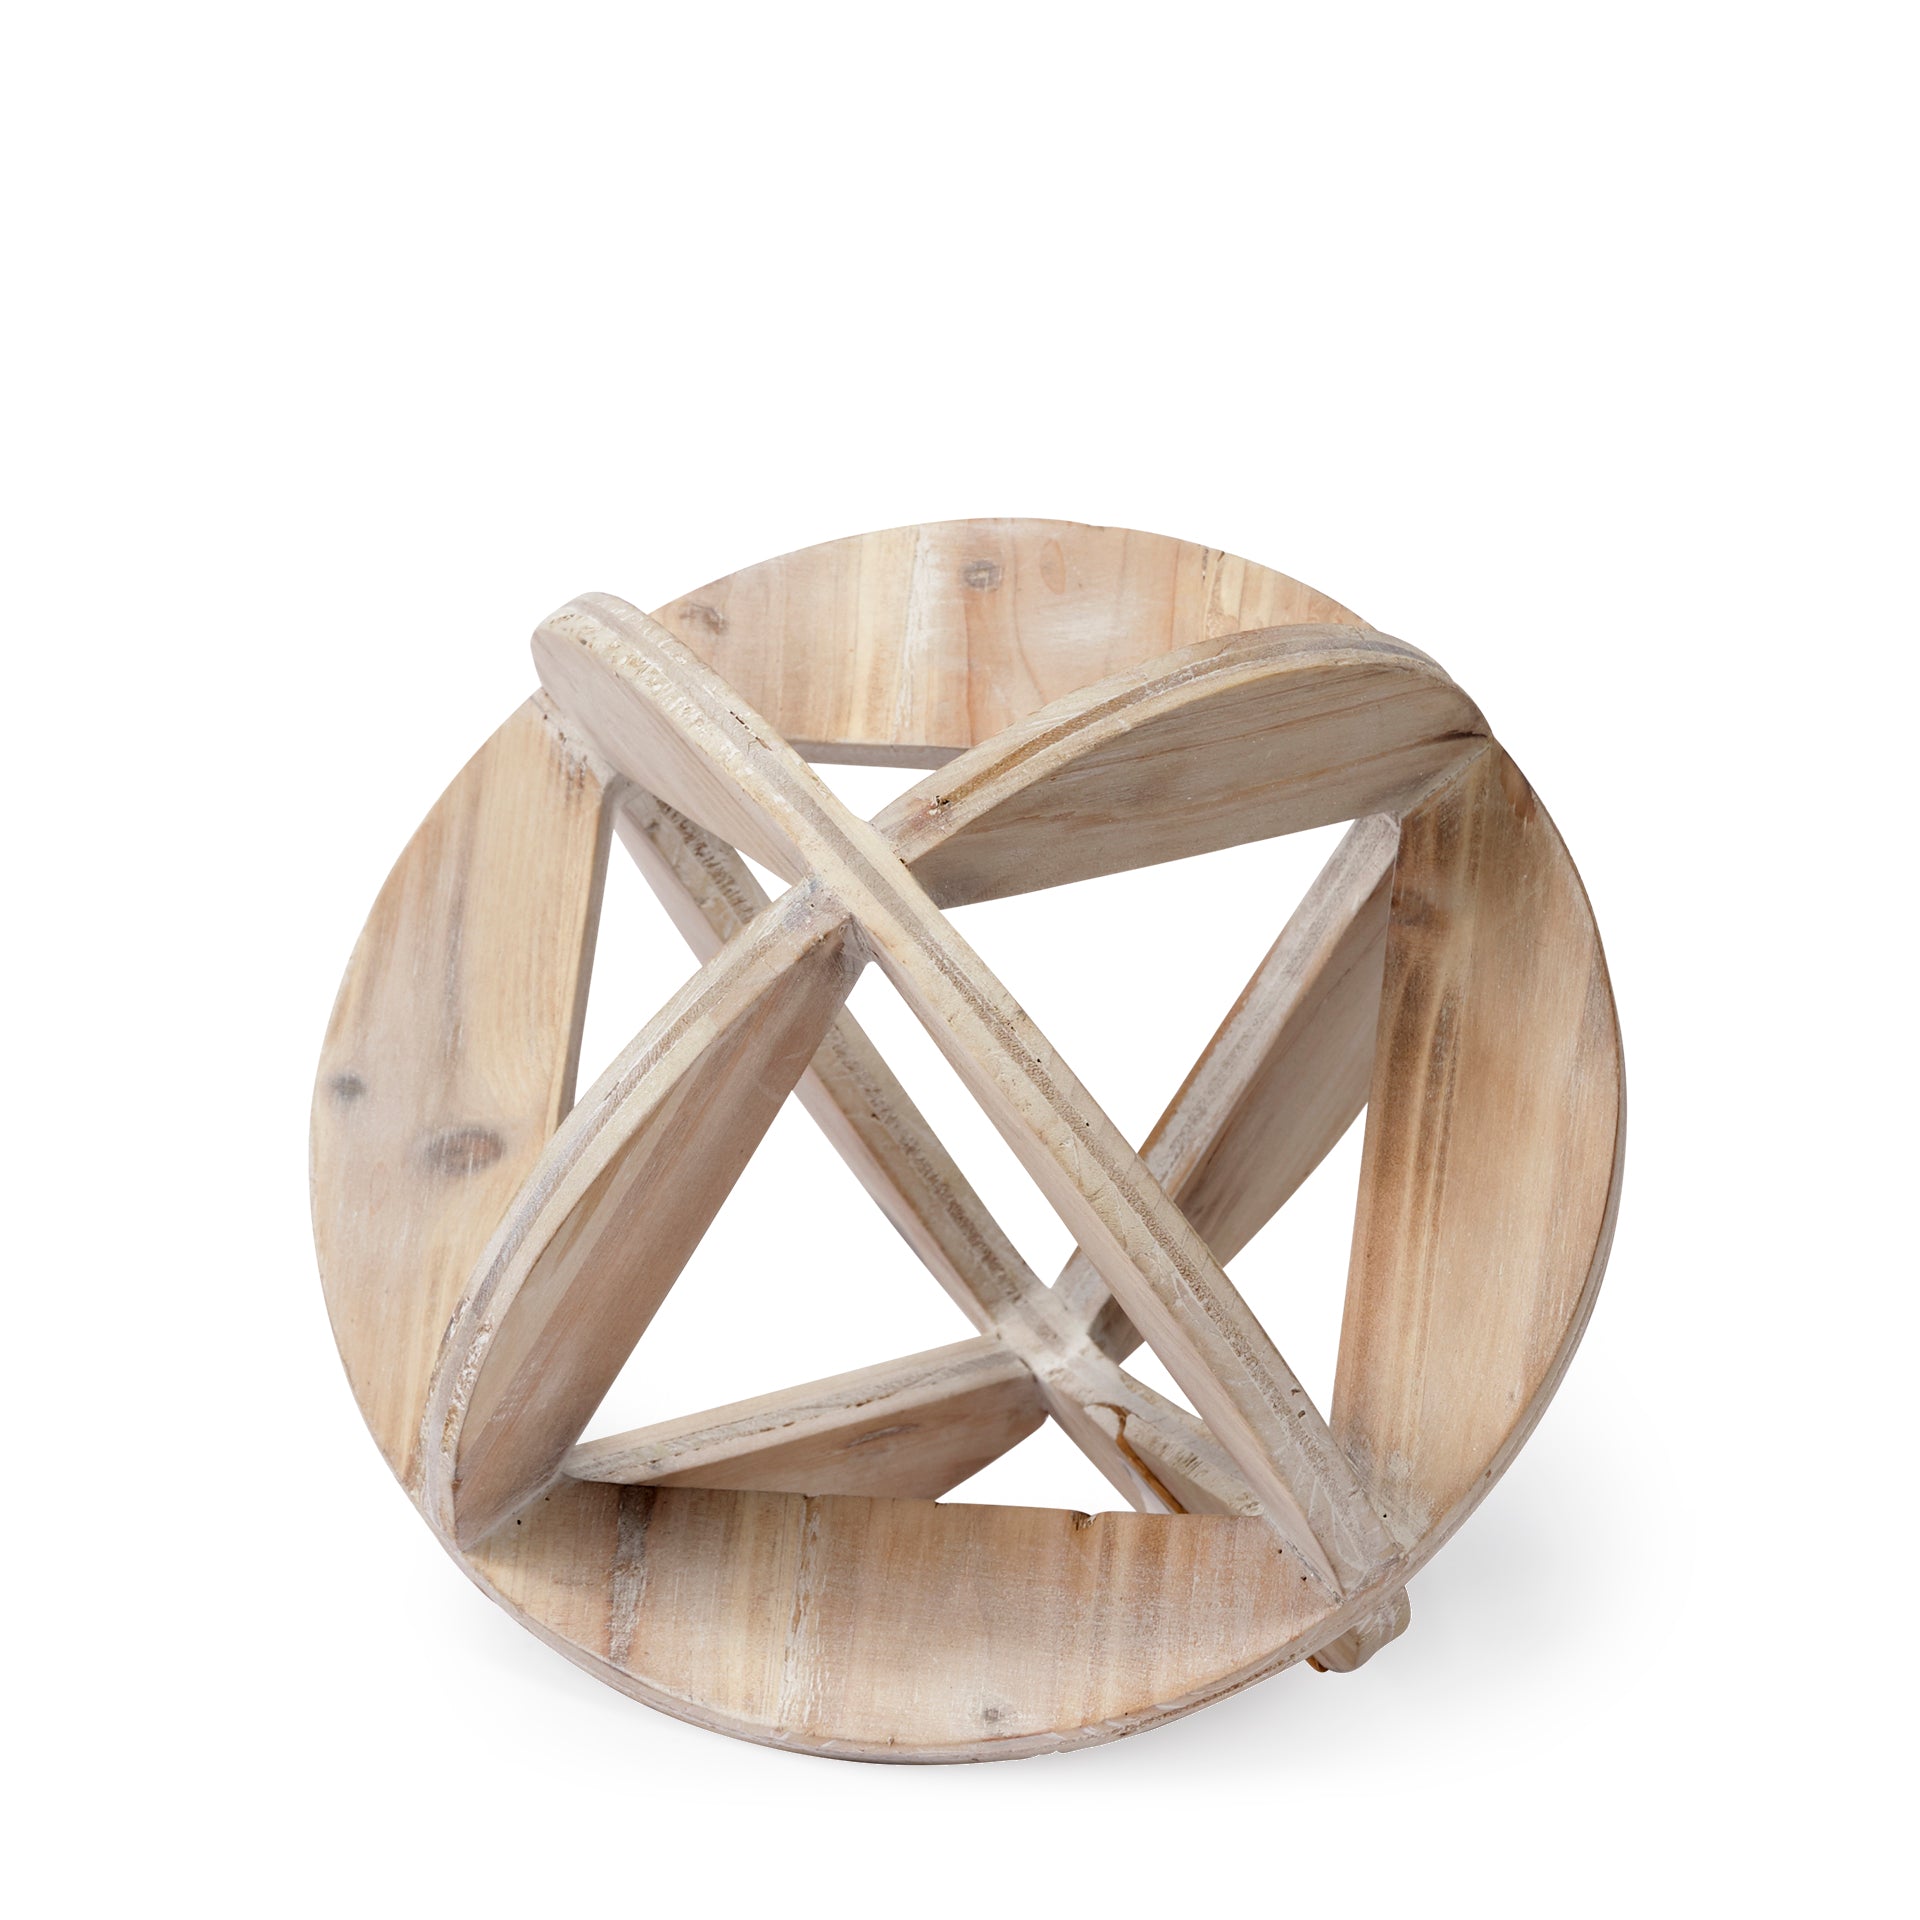 Mercana Bellatrix Decorative Wooden Sphere